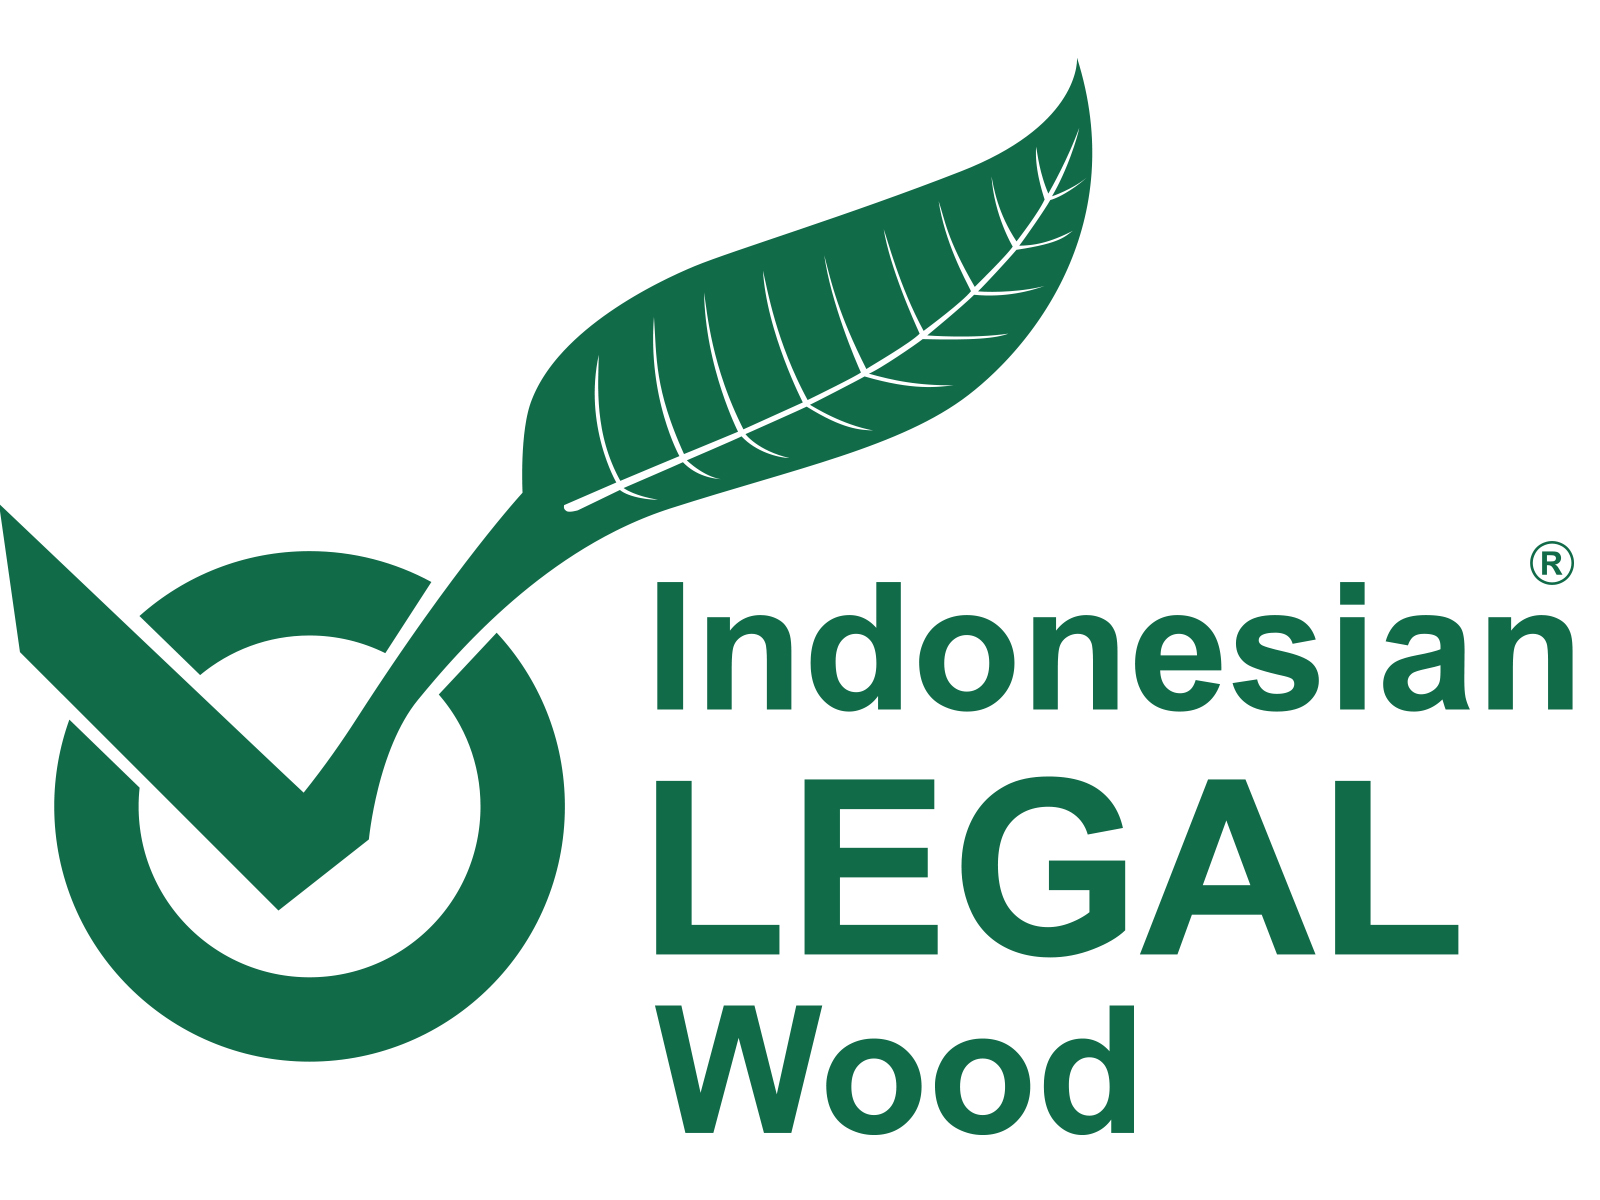 Indoesian Legal Wood